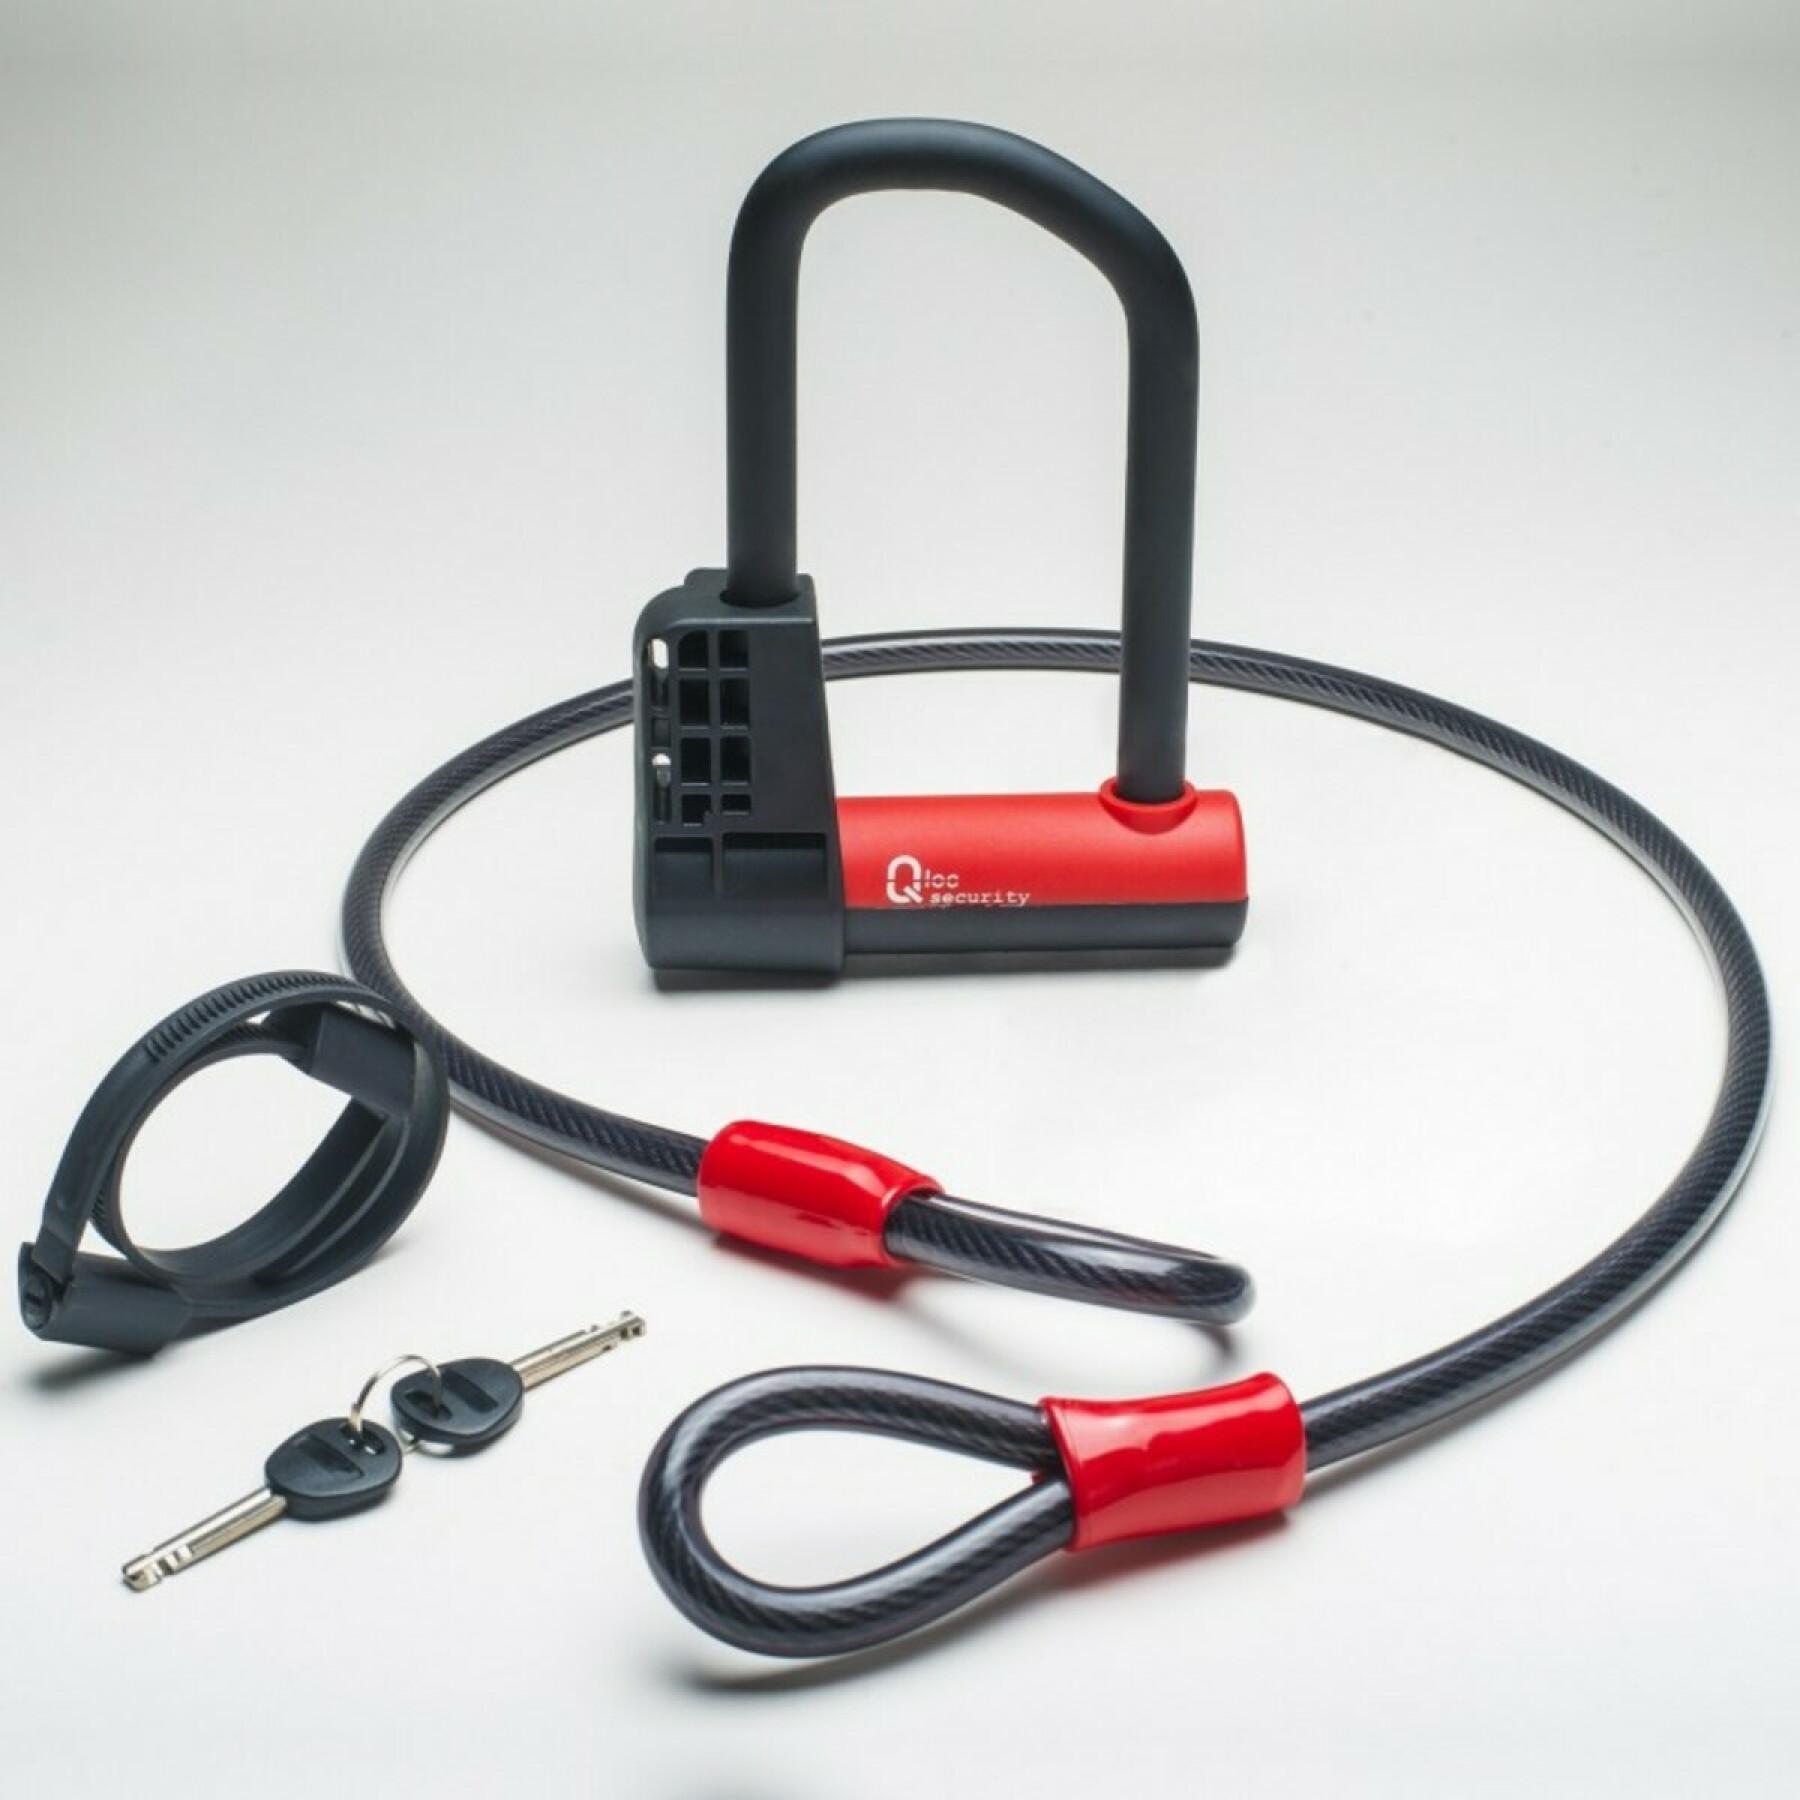 Dispositivo anti-roubo u com suporte Qloc Security Ø14 75/150mm + câble Ø12/1000mm